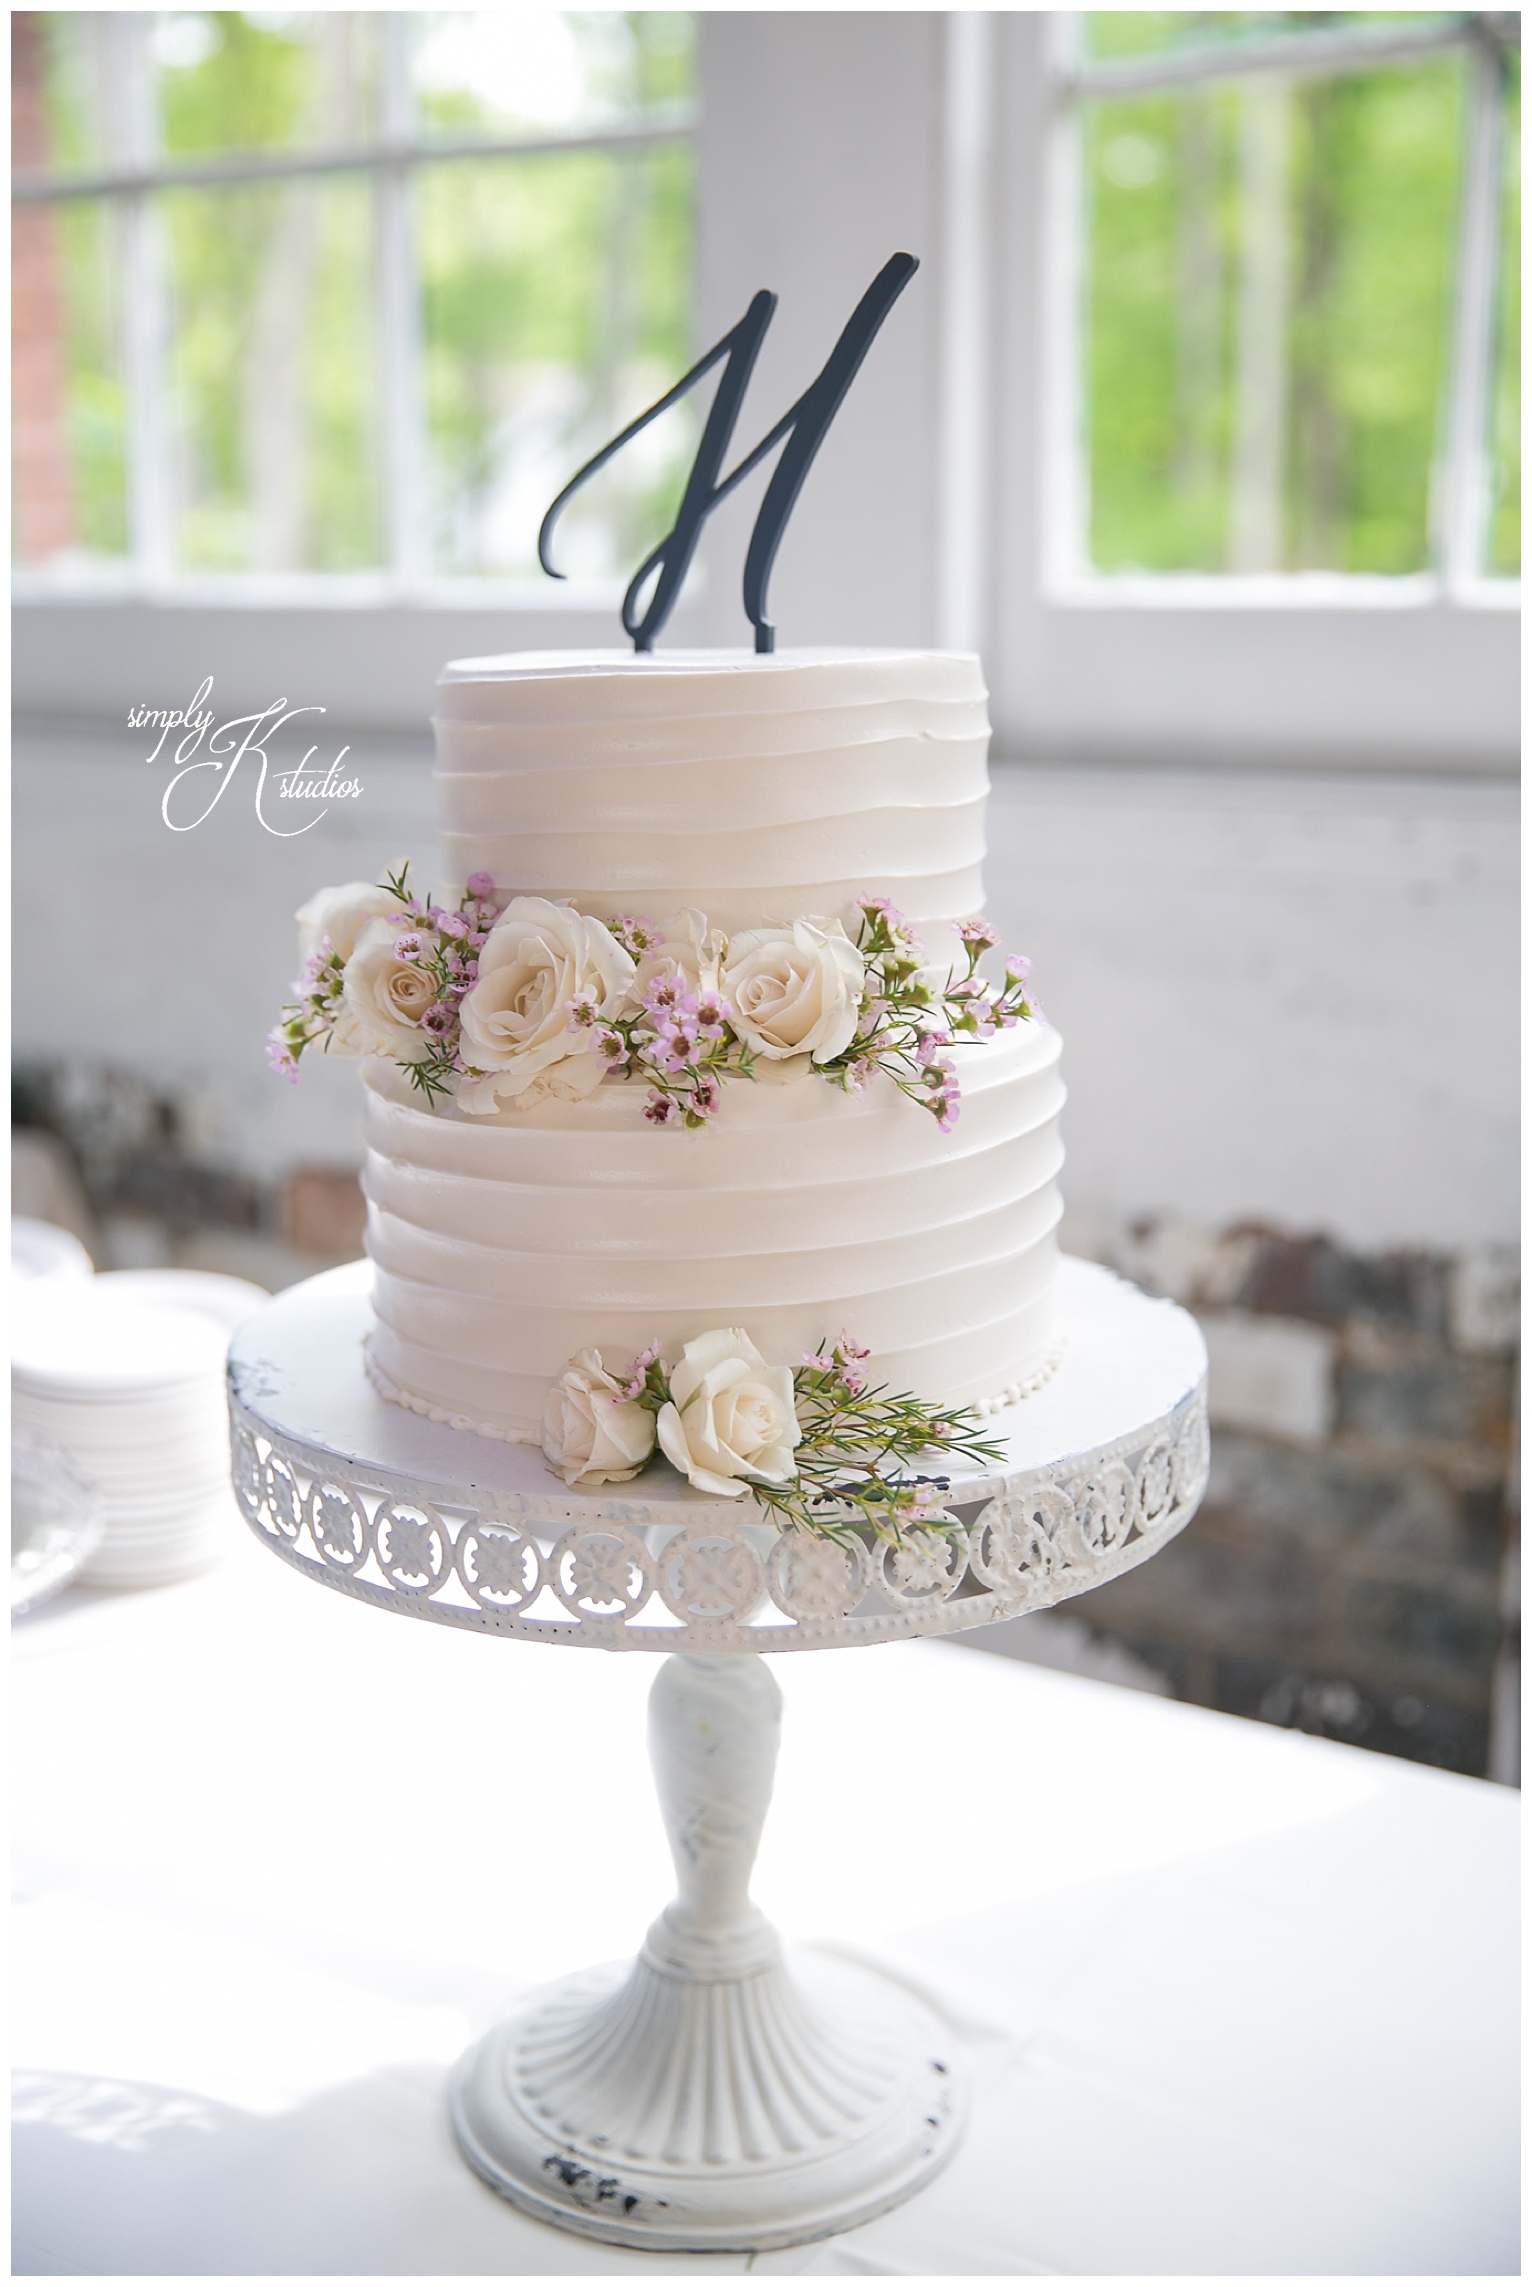 Wedding Cakes.jpg